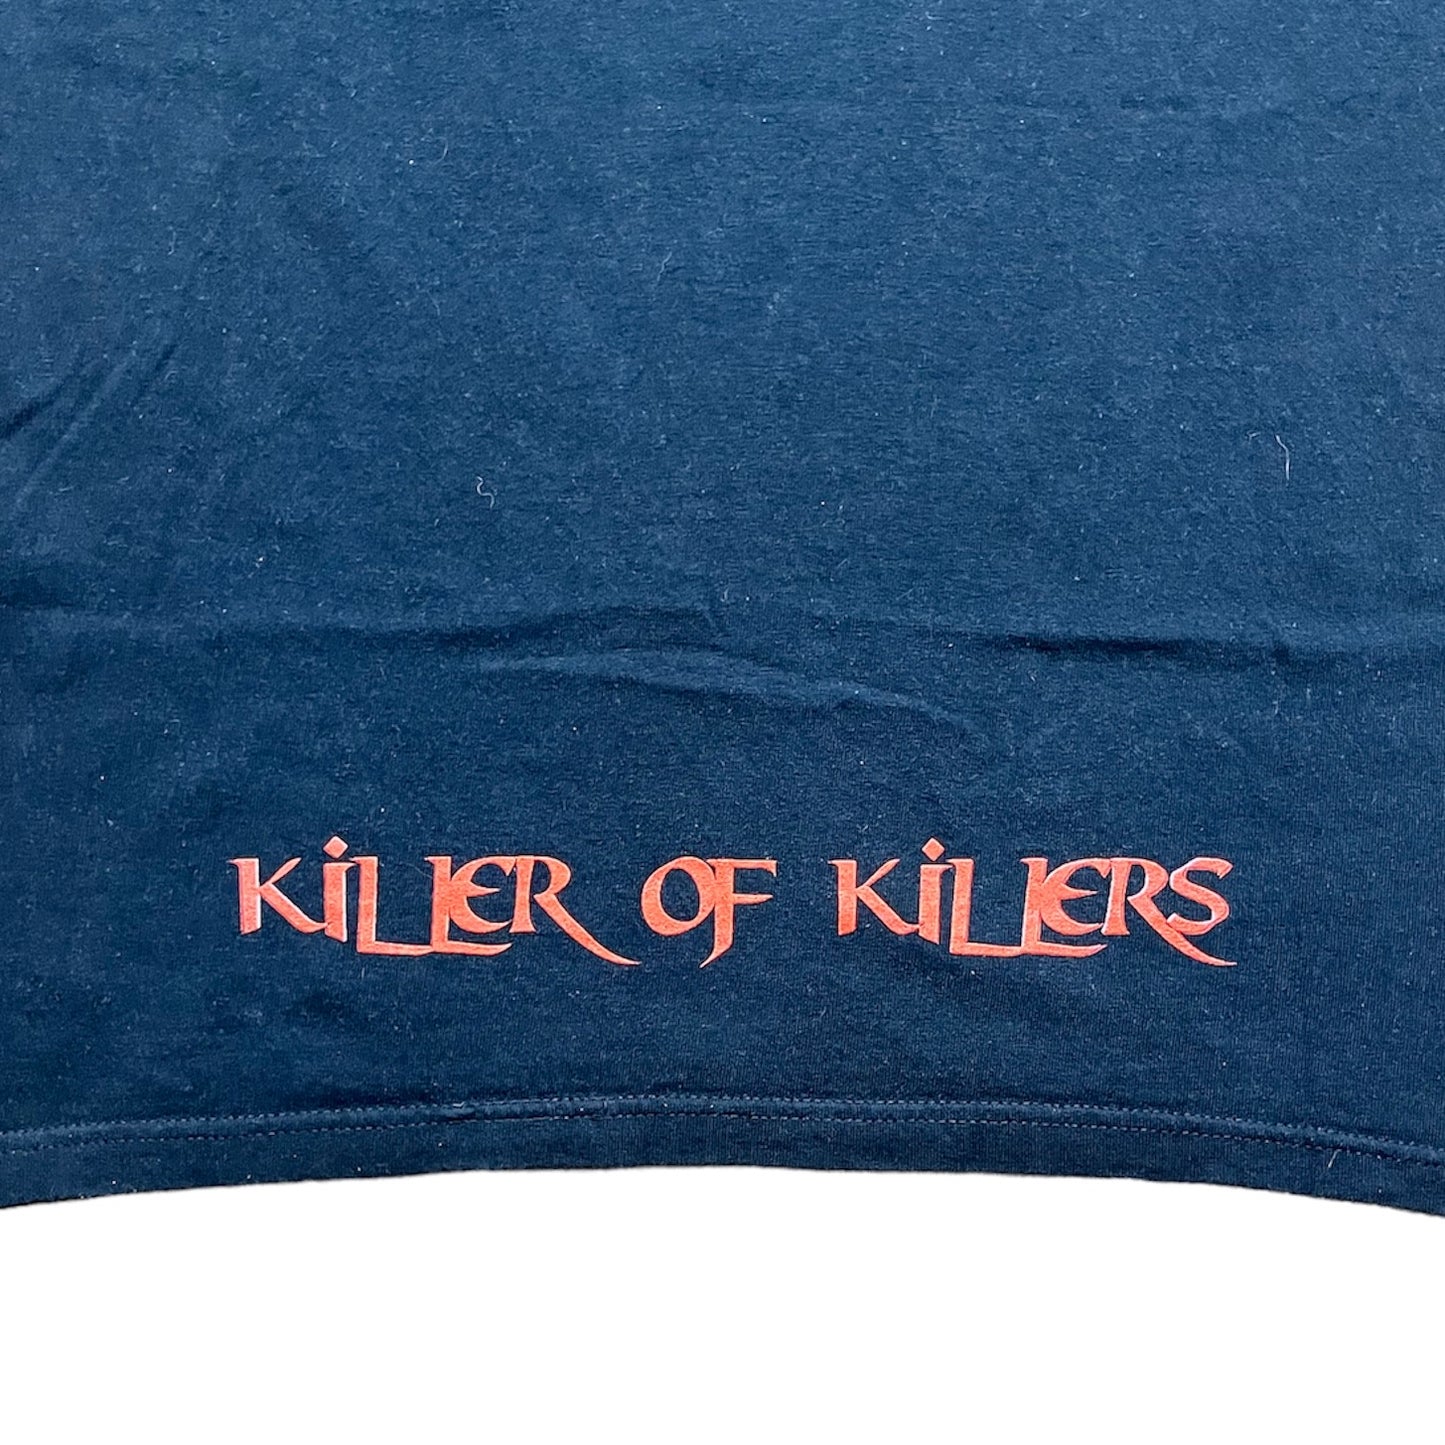 2006 The Crow Killer of Killers Movie Promo Tee / M